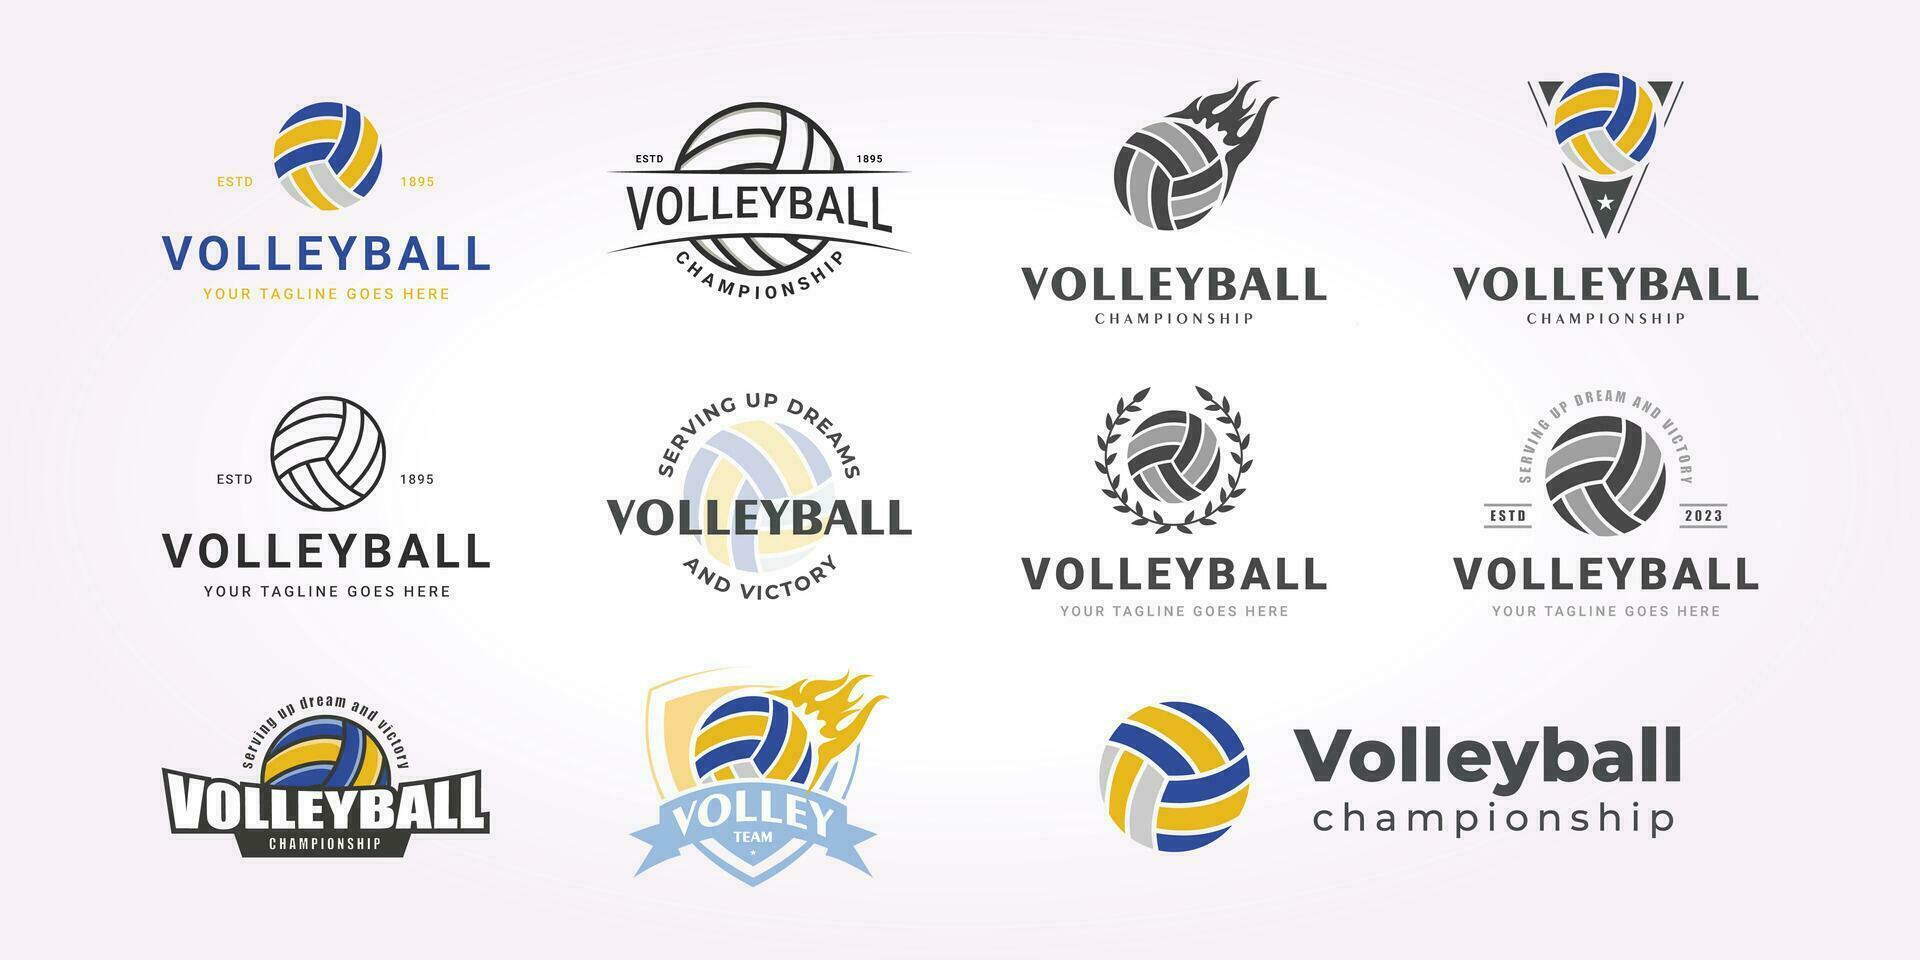 vintage vetor voleibol logotipo pacote, simples Projeto conjunto do voleibol ilustrações